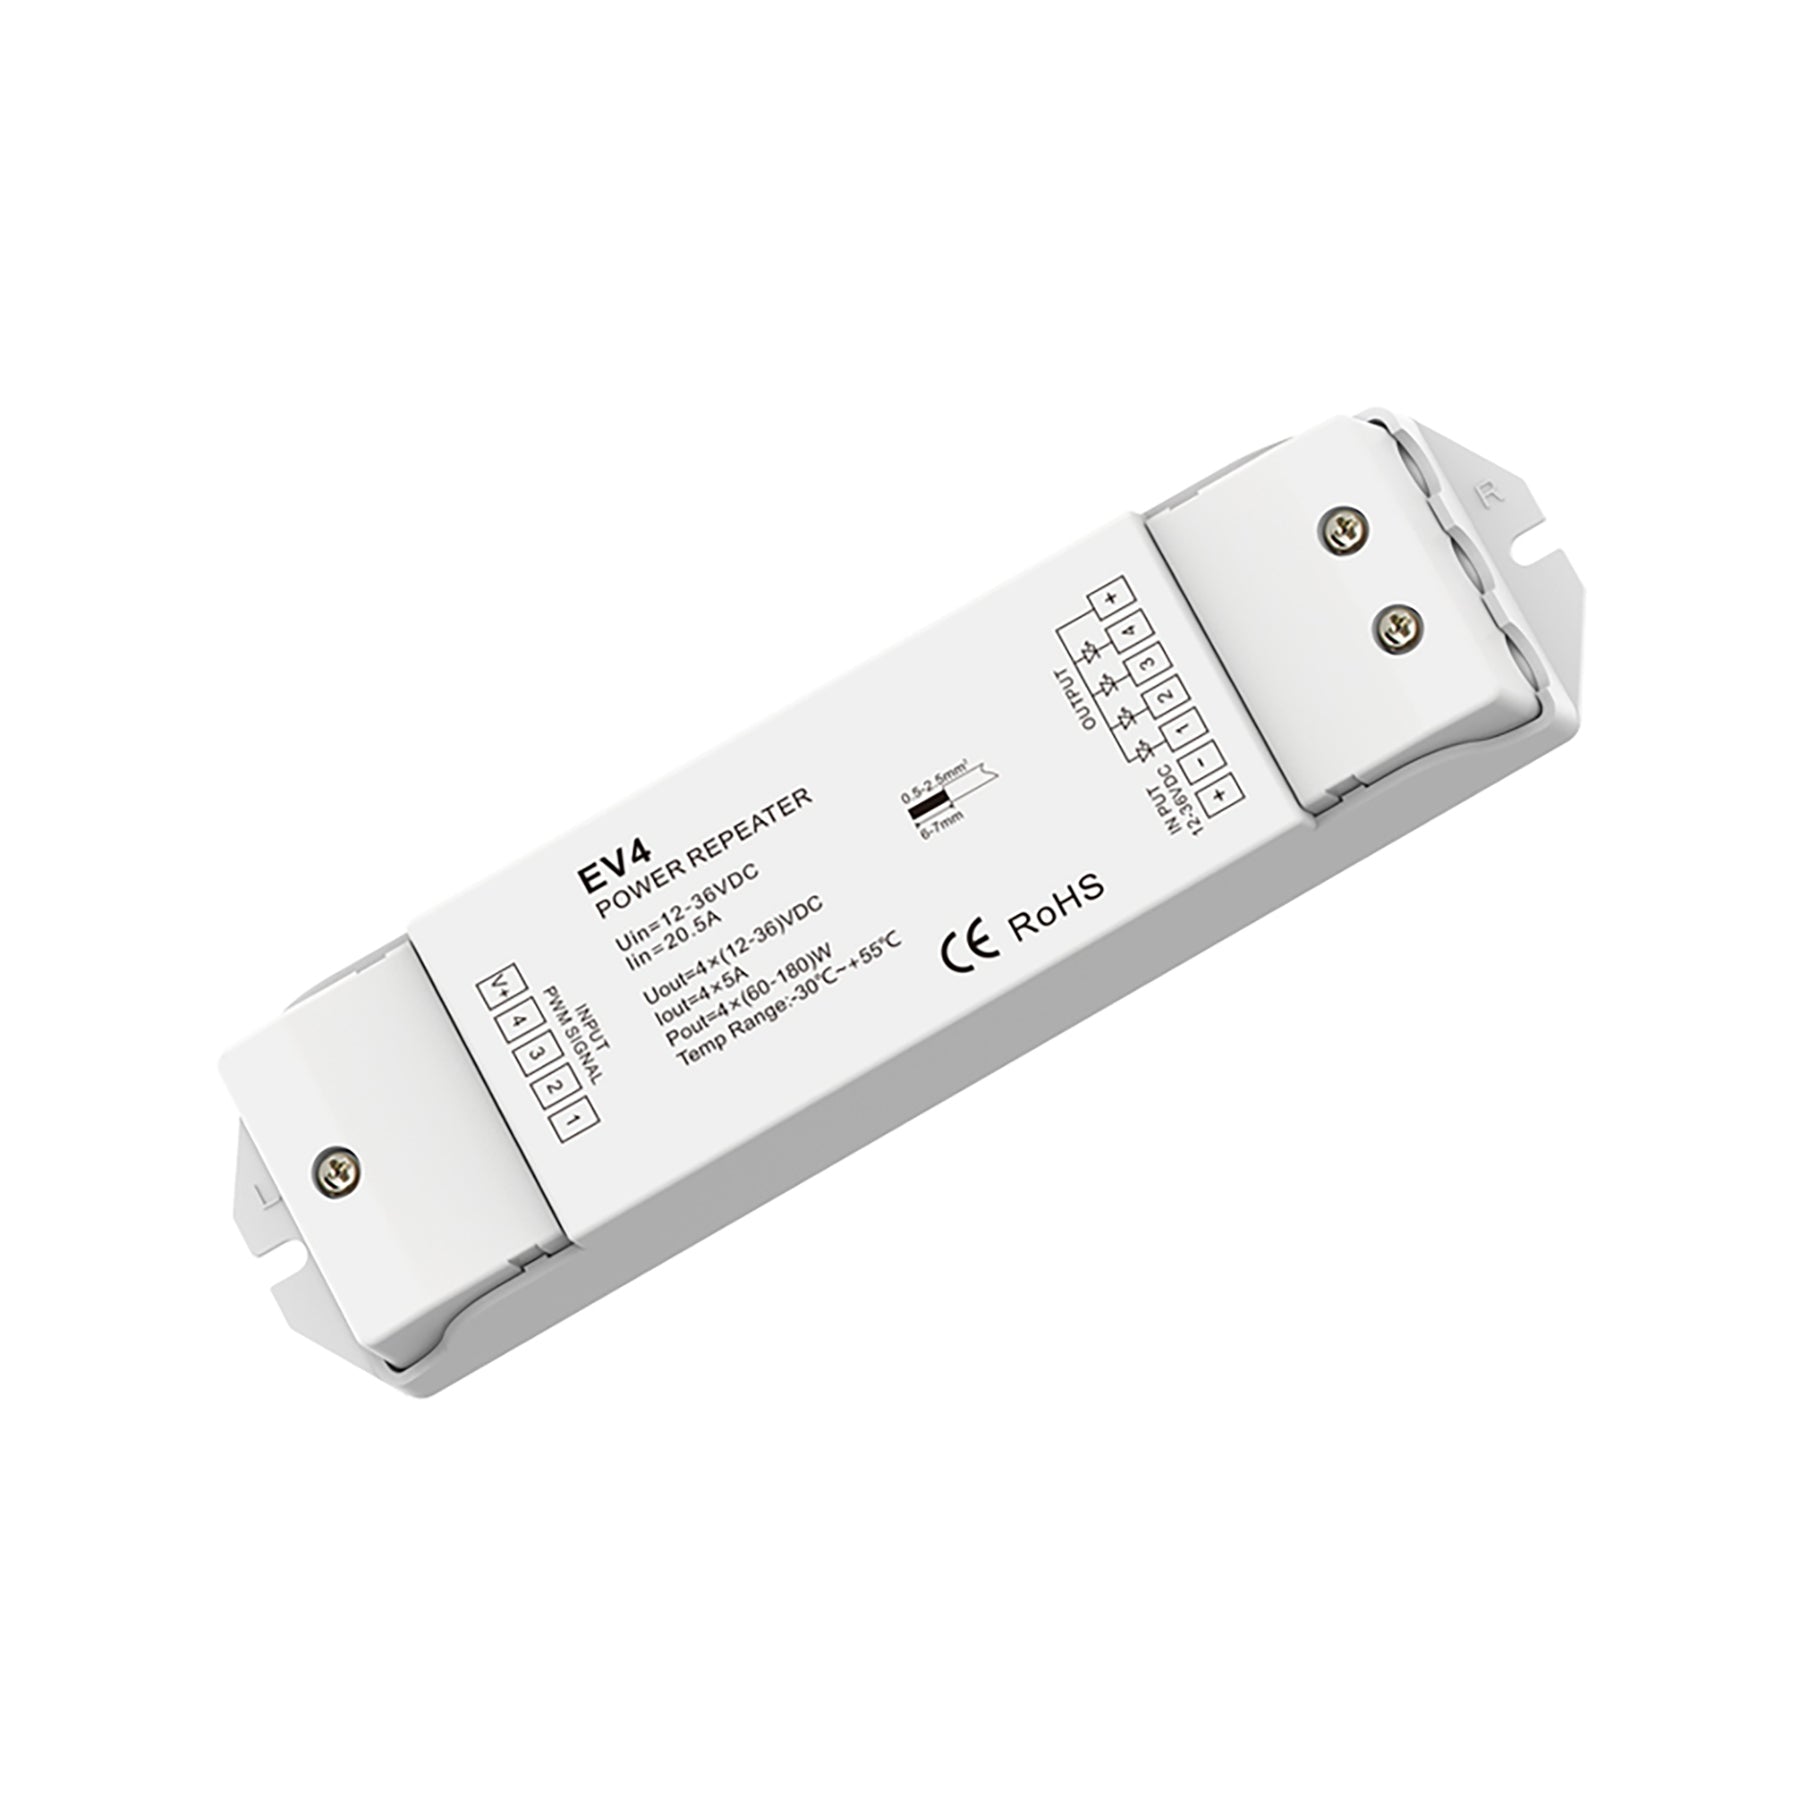 G.W.S LED Wholesale LED Amplifiers 4CH*5A 12-36V DC CV CCT/RGB/RGBW Power Repeater EV4